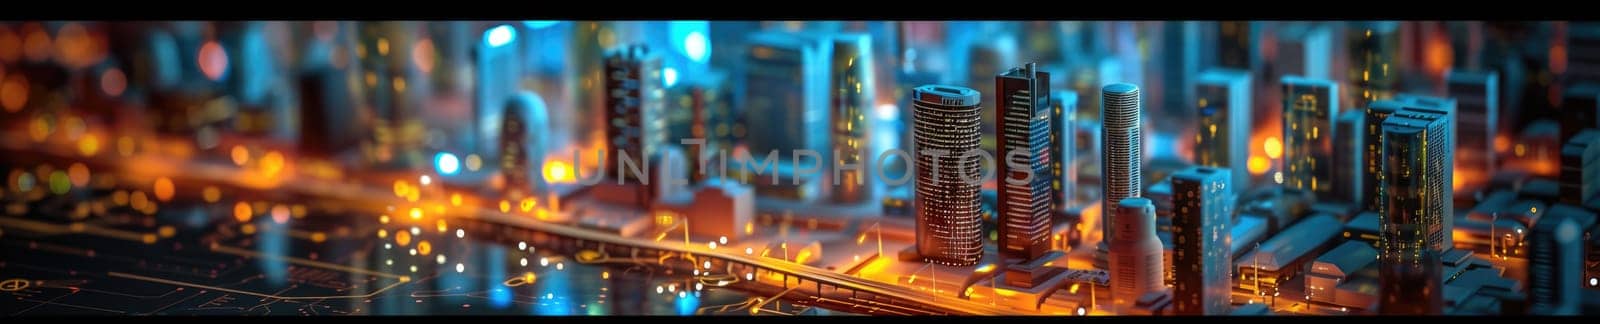 Conceptual Smart City on Digital Circuit Board, AI Concept AIG41 by biancoblue